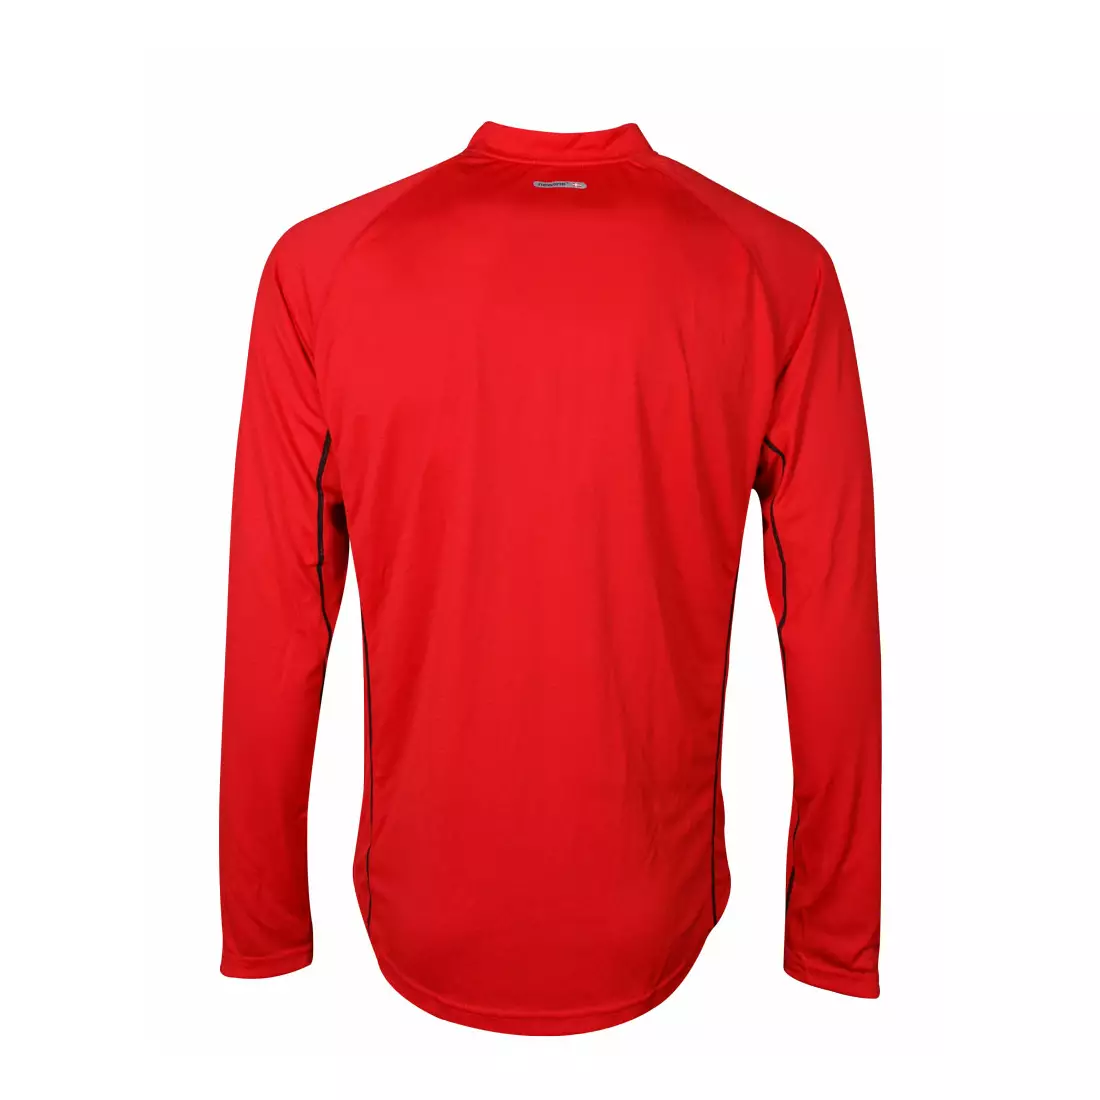 NEWLINE BASE ZIP SHIRT - pánská běžecká košile D/R 14370-04